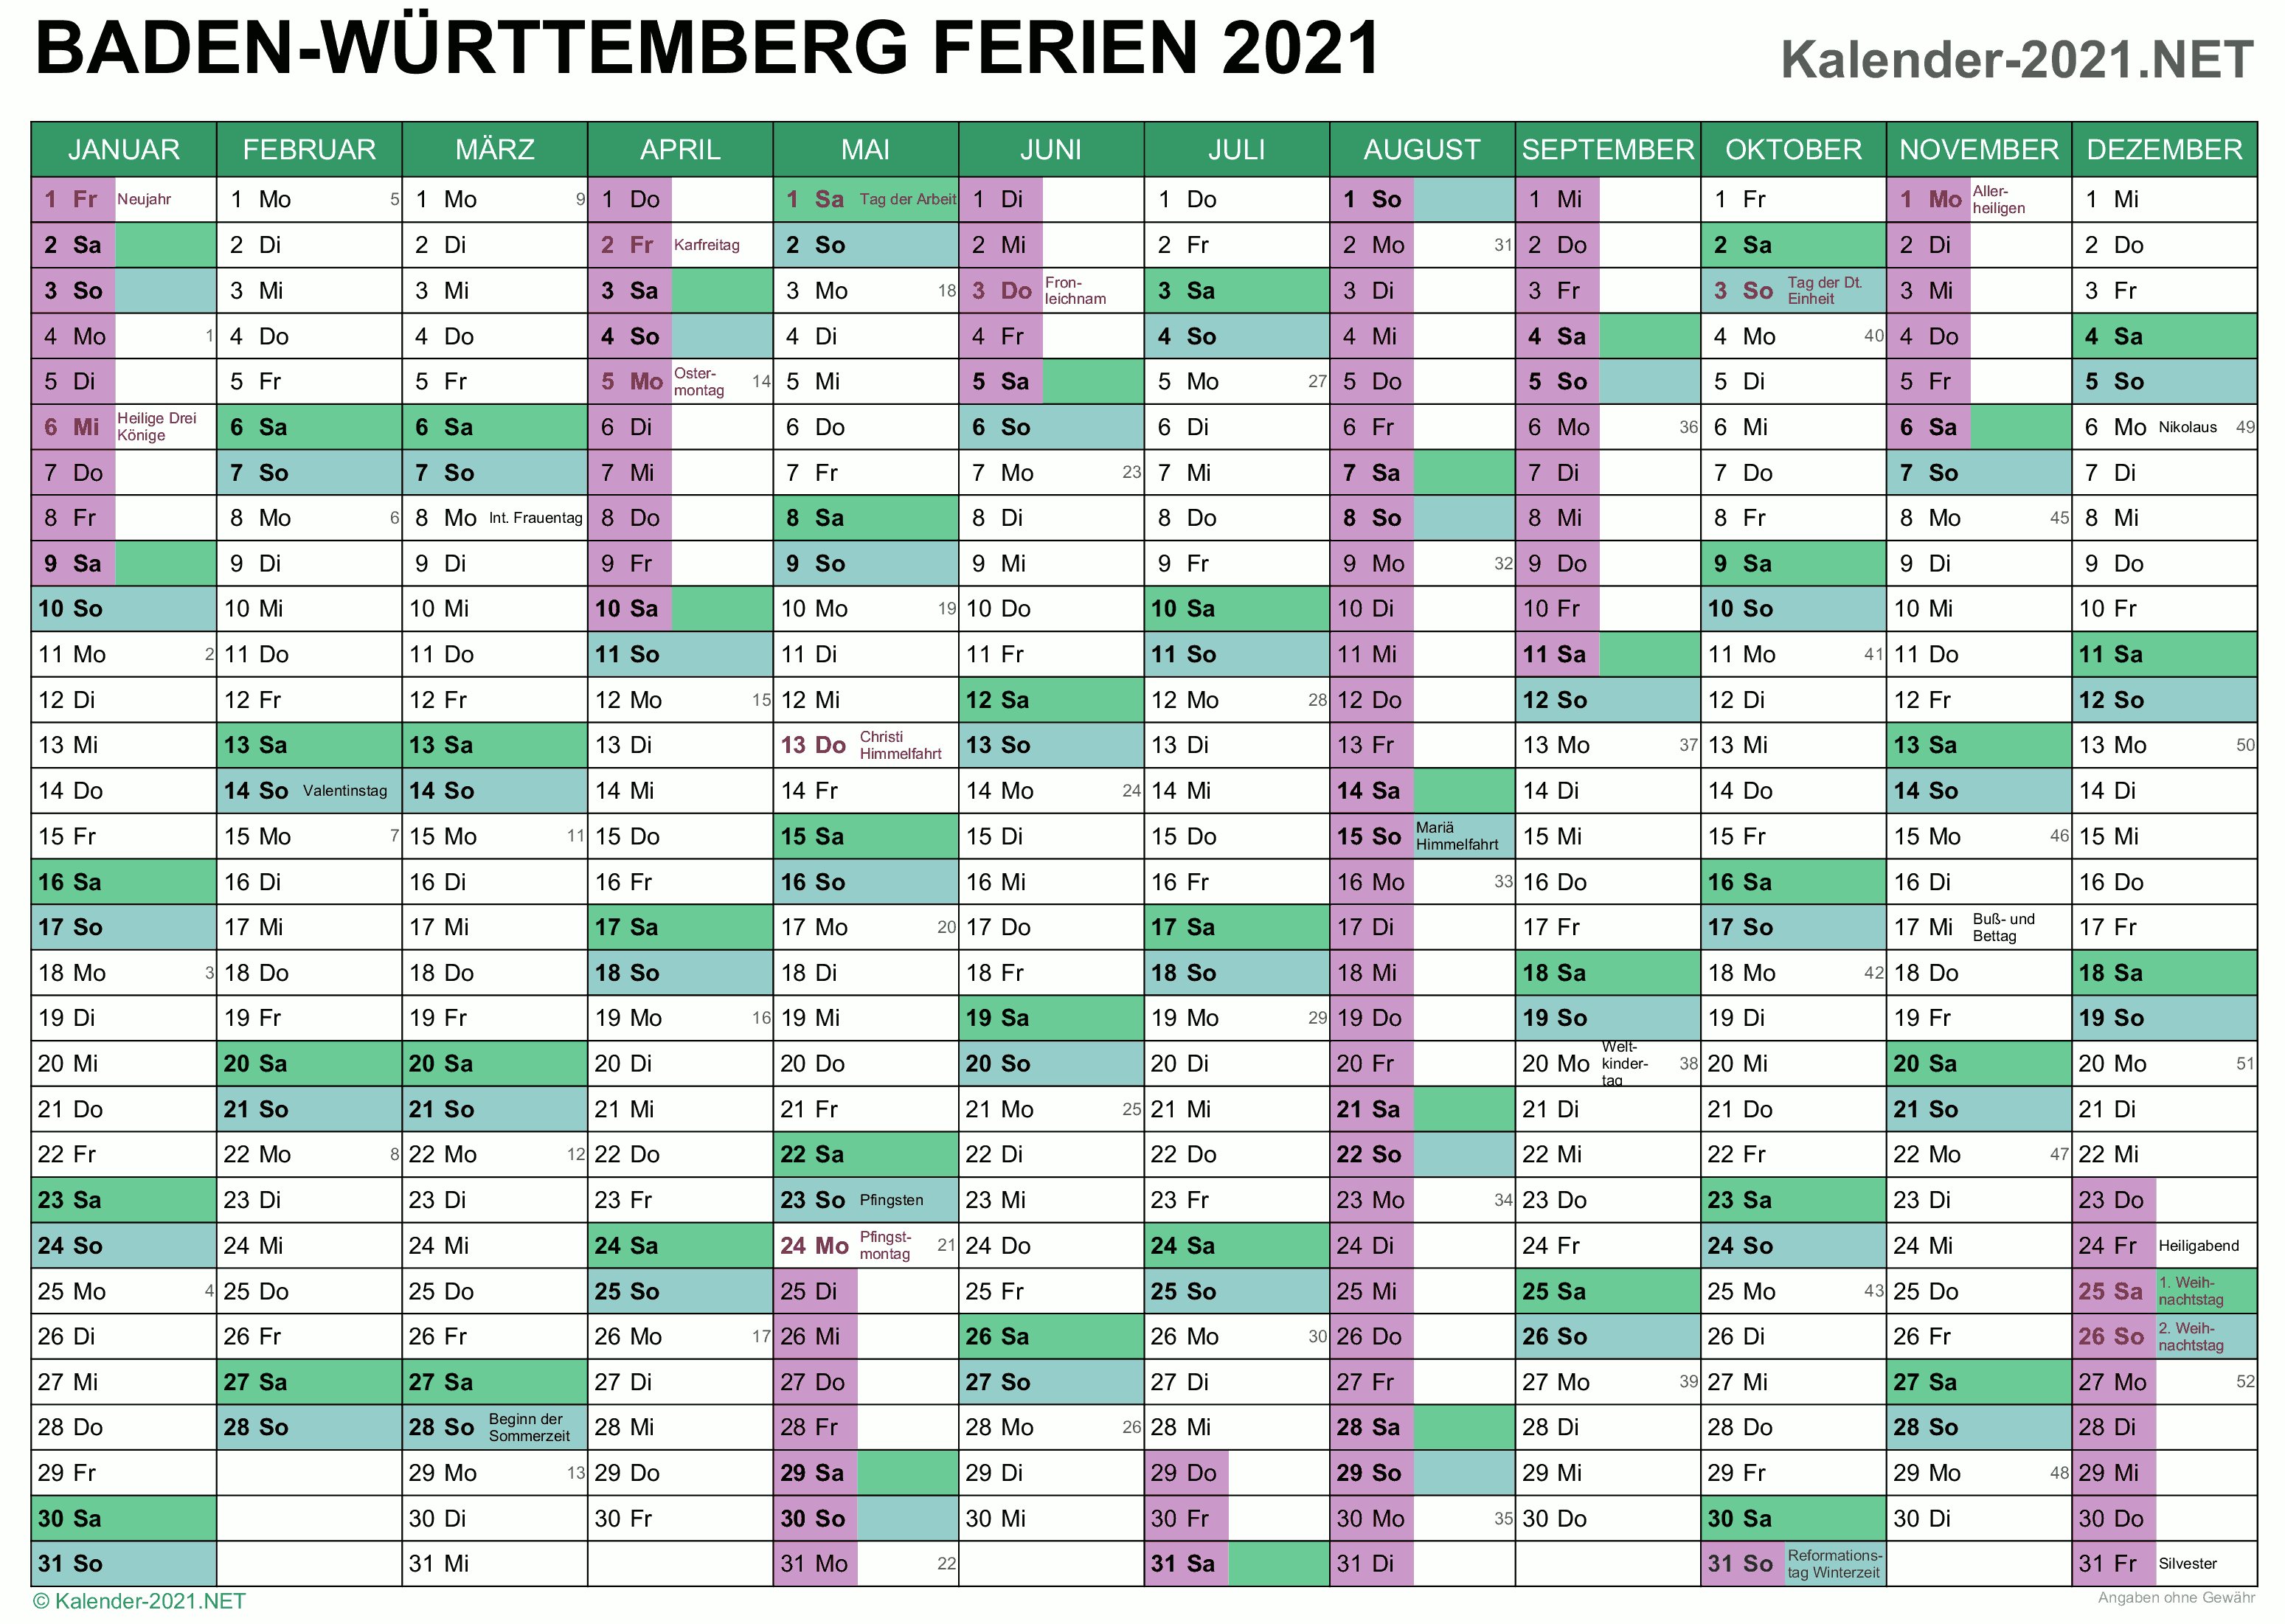 Ferienbaden Württemberg 2021 - Kalender 2021 Baden ...